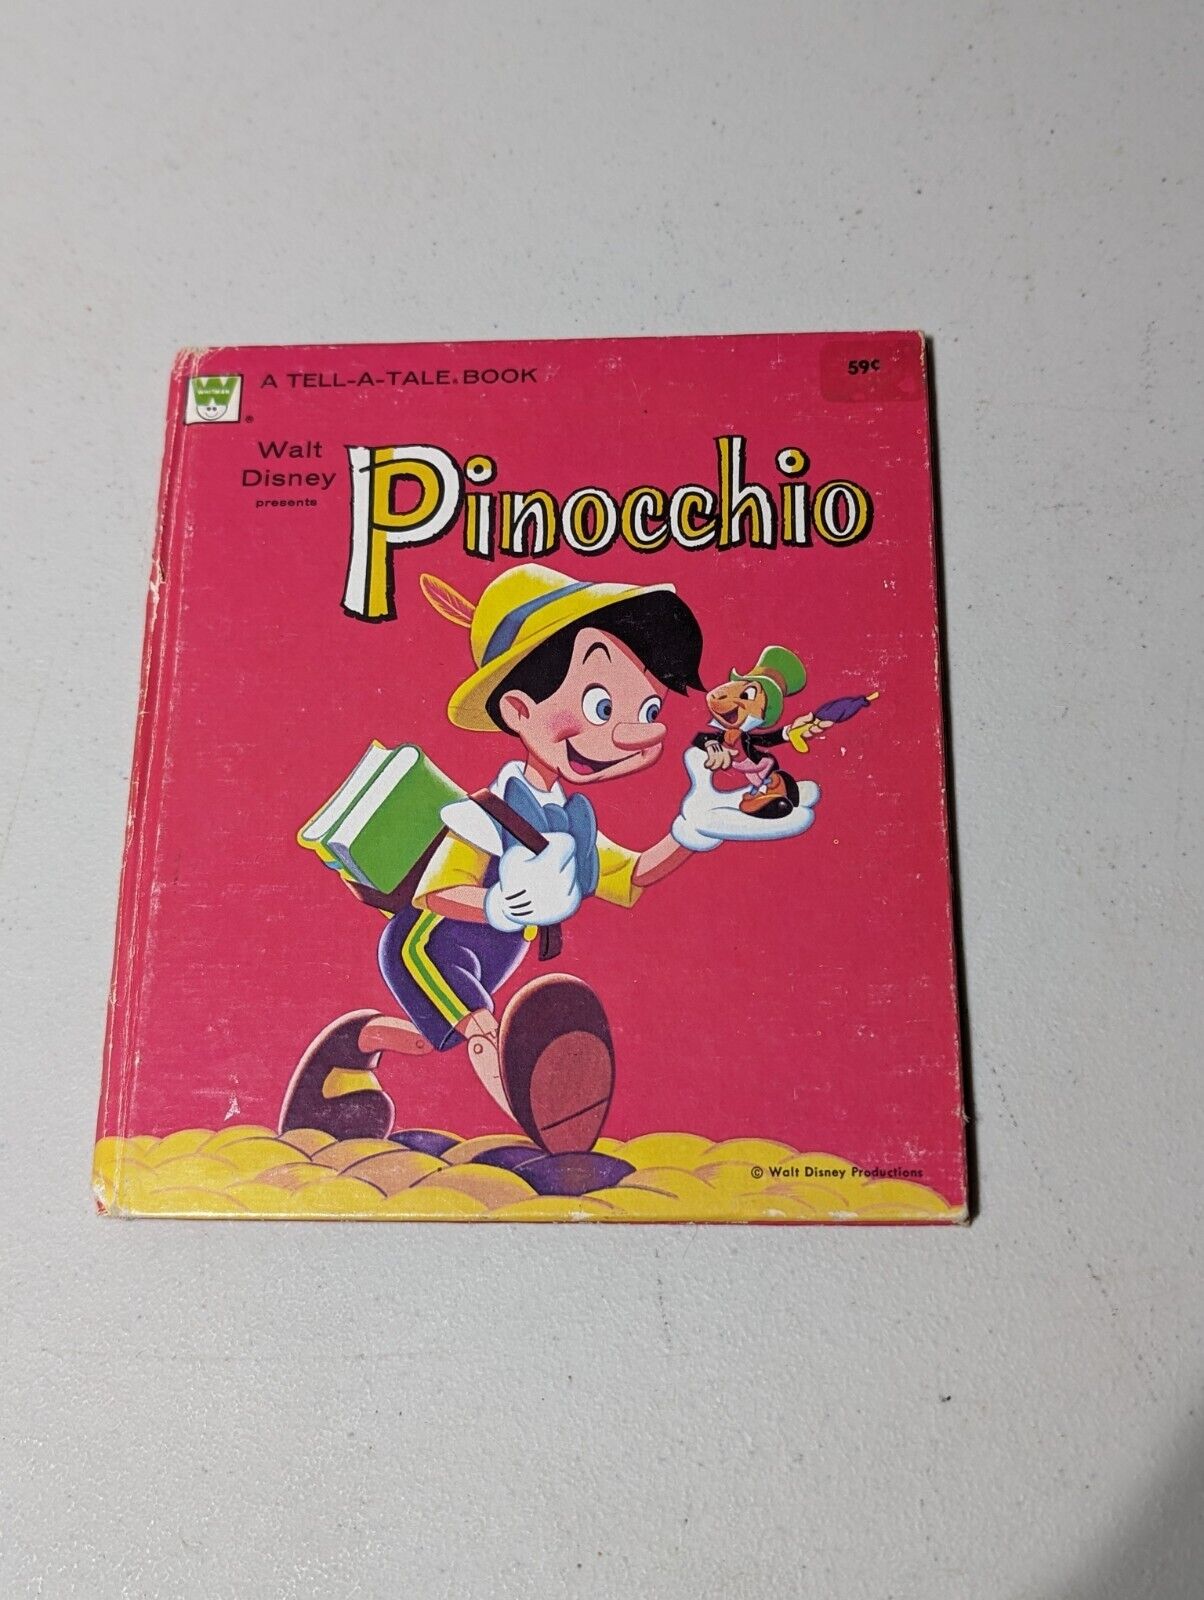 Vintage 1961 Pinocchio Walt Disney Tell-a-Tale Book Illustrated Children\'s Book